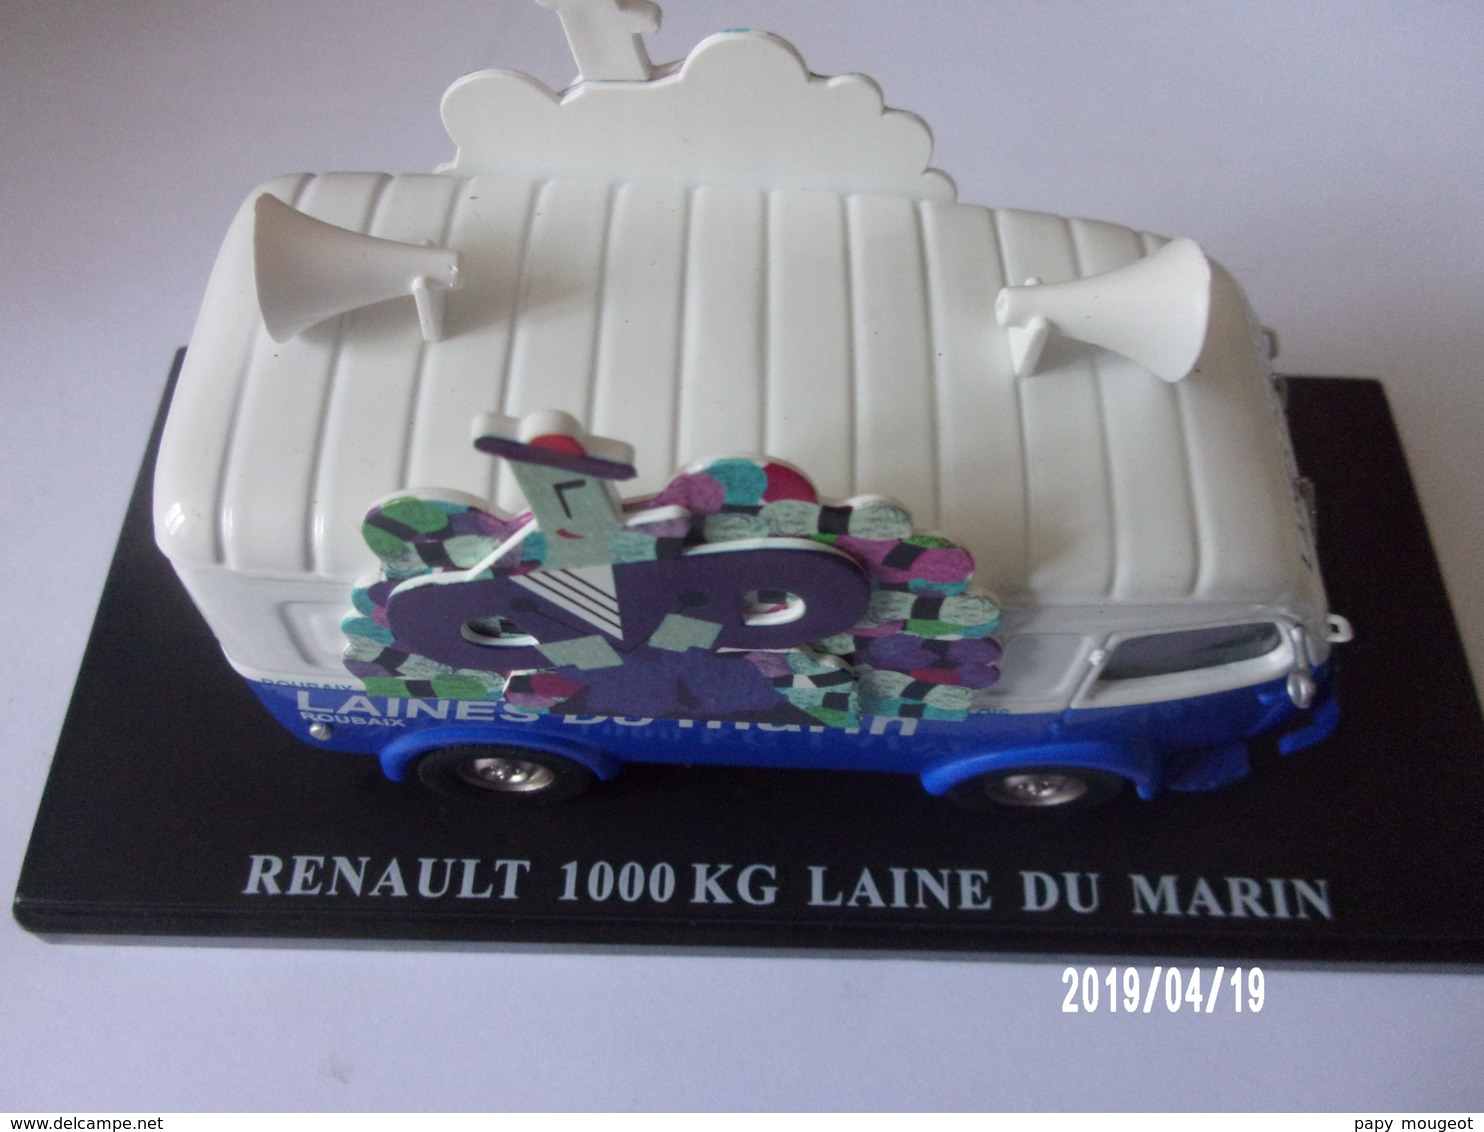 RENAULT 1000 KG LAINES DU MARIN - Advertising - All Brands